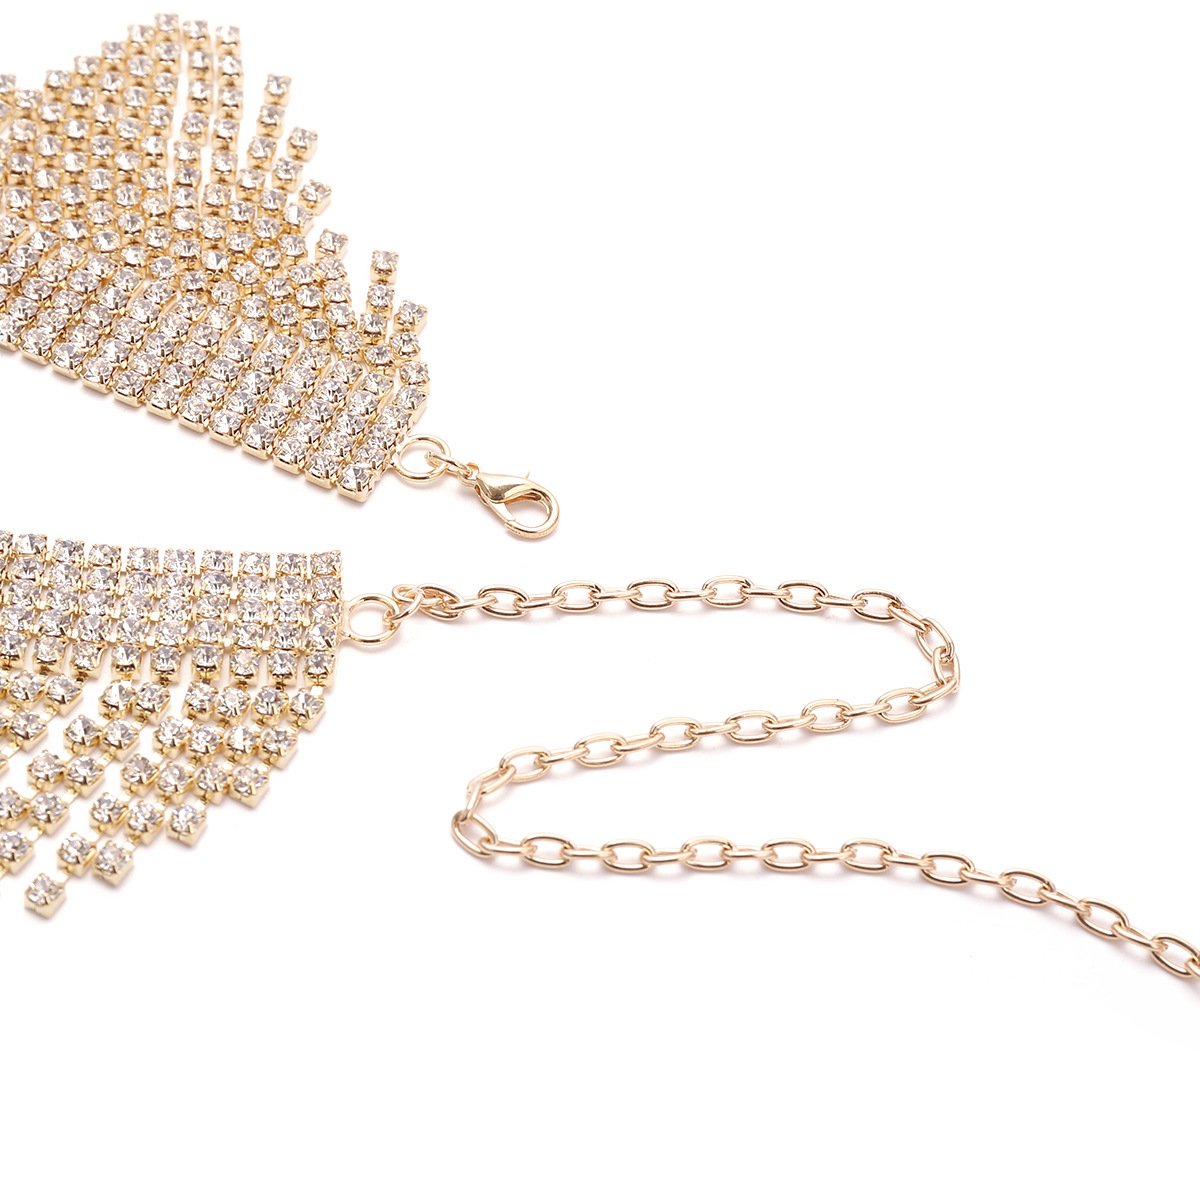 Crystal Rhinestone Jewelry Chain Belt